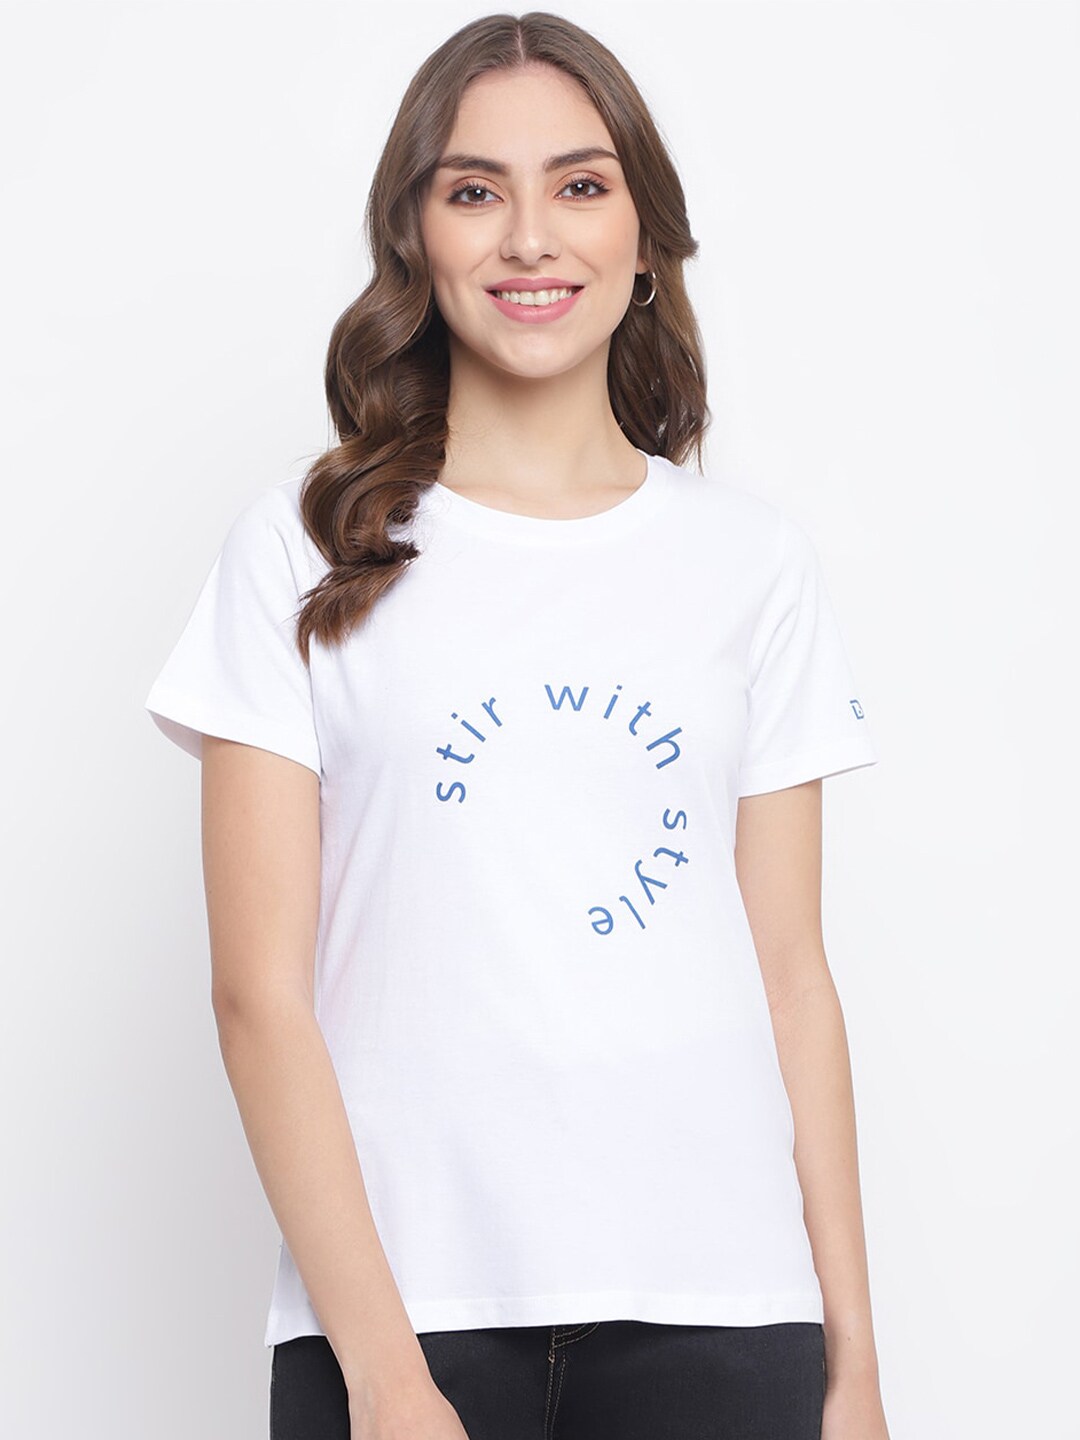 Belliskey Women Typography Printed Cotton T-shirt Price in India